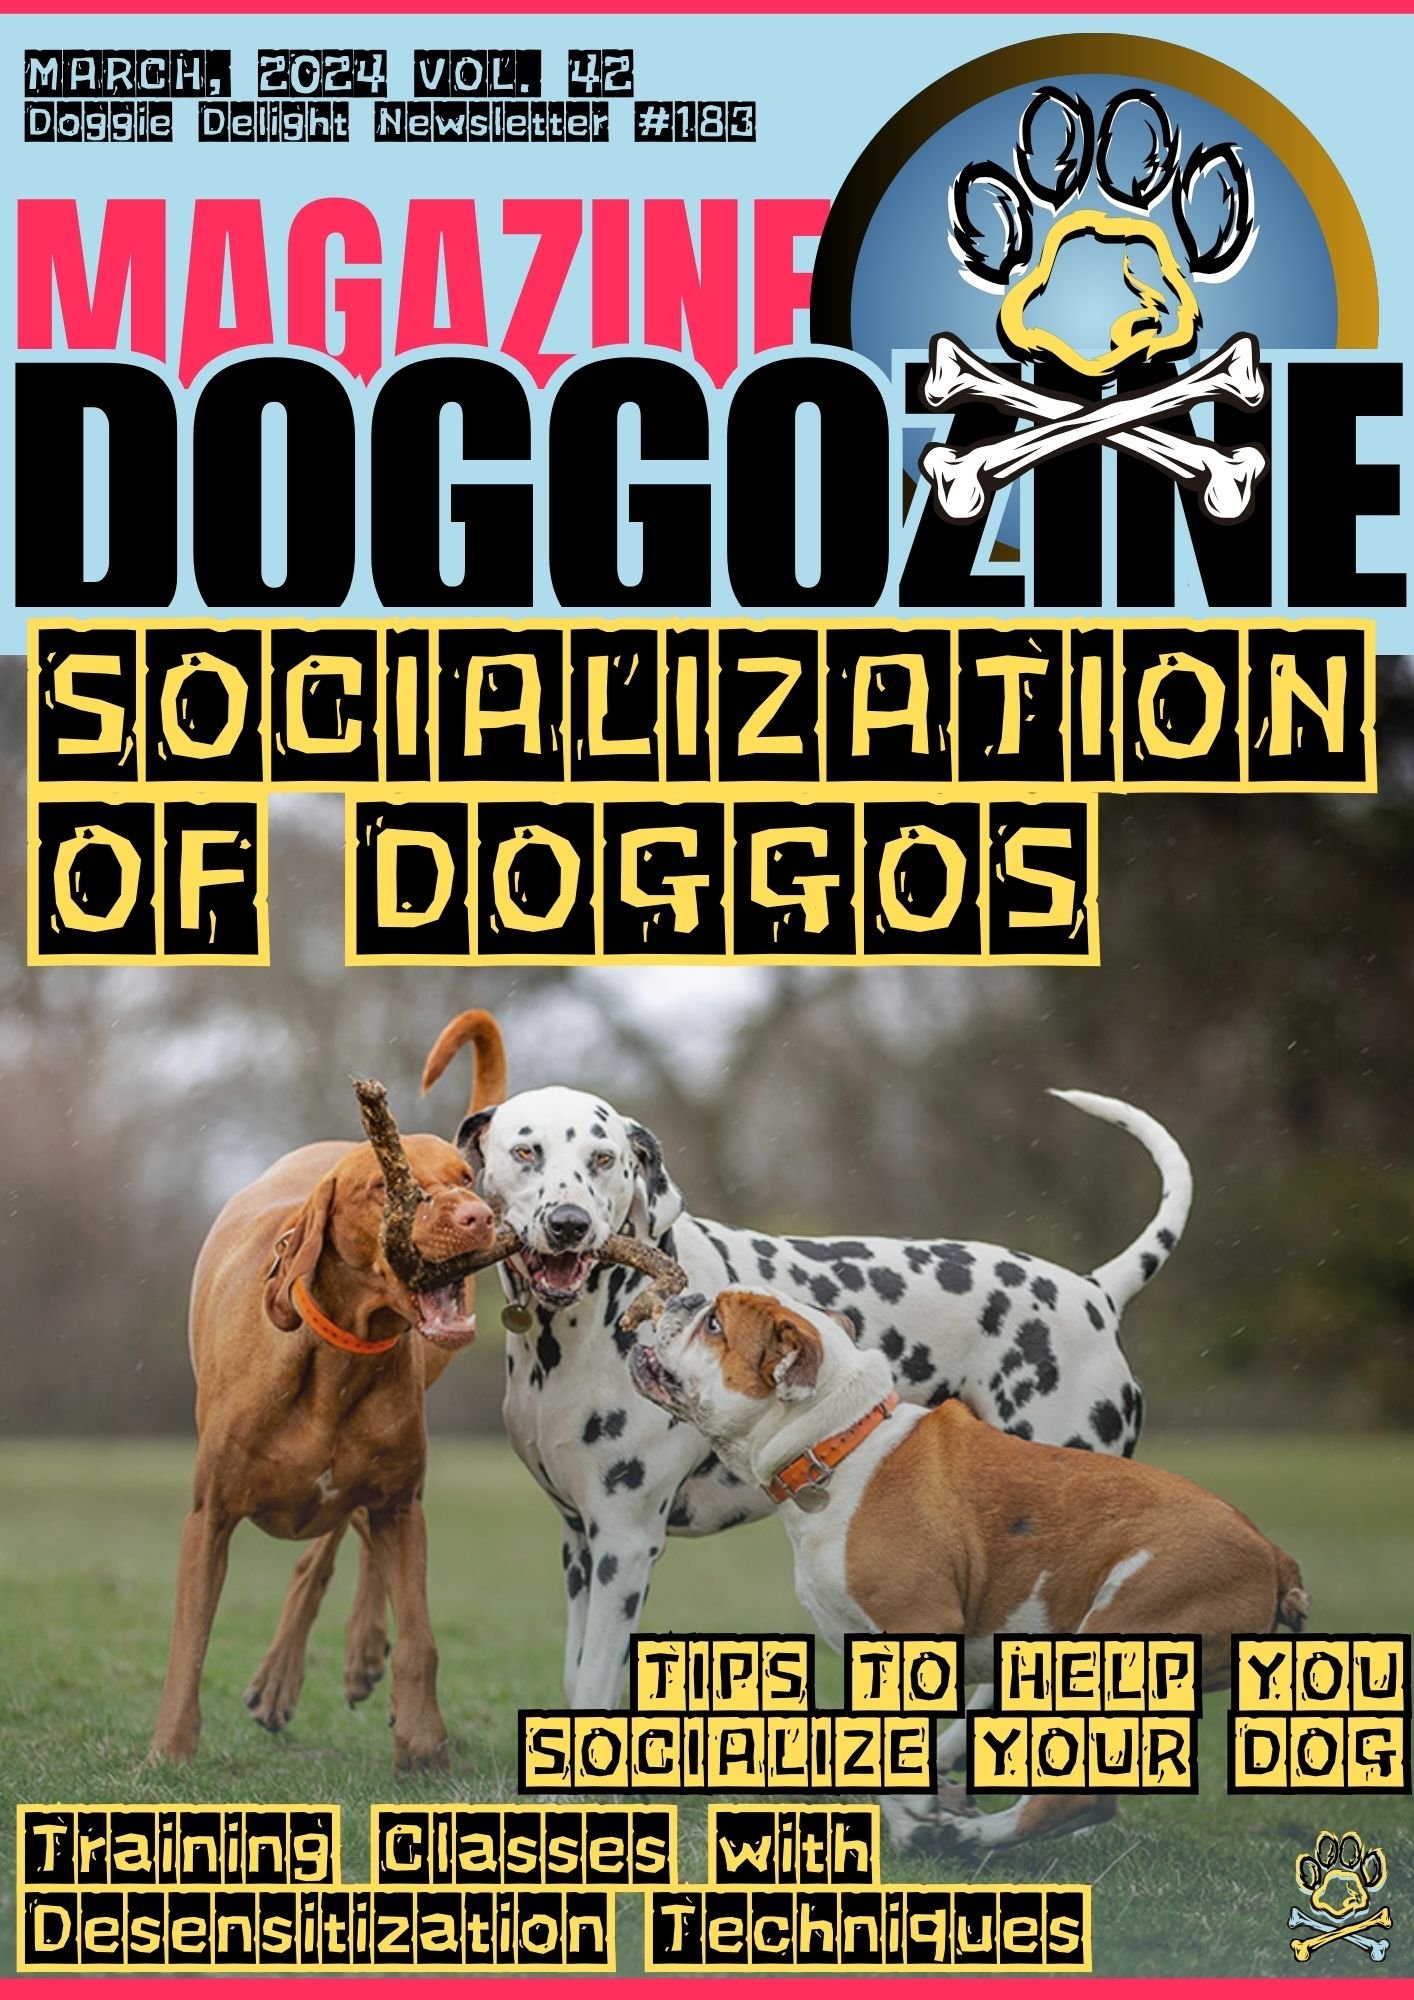 DOG SOCIALIZATION